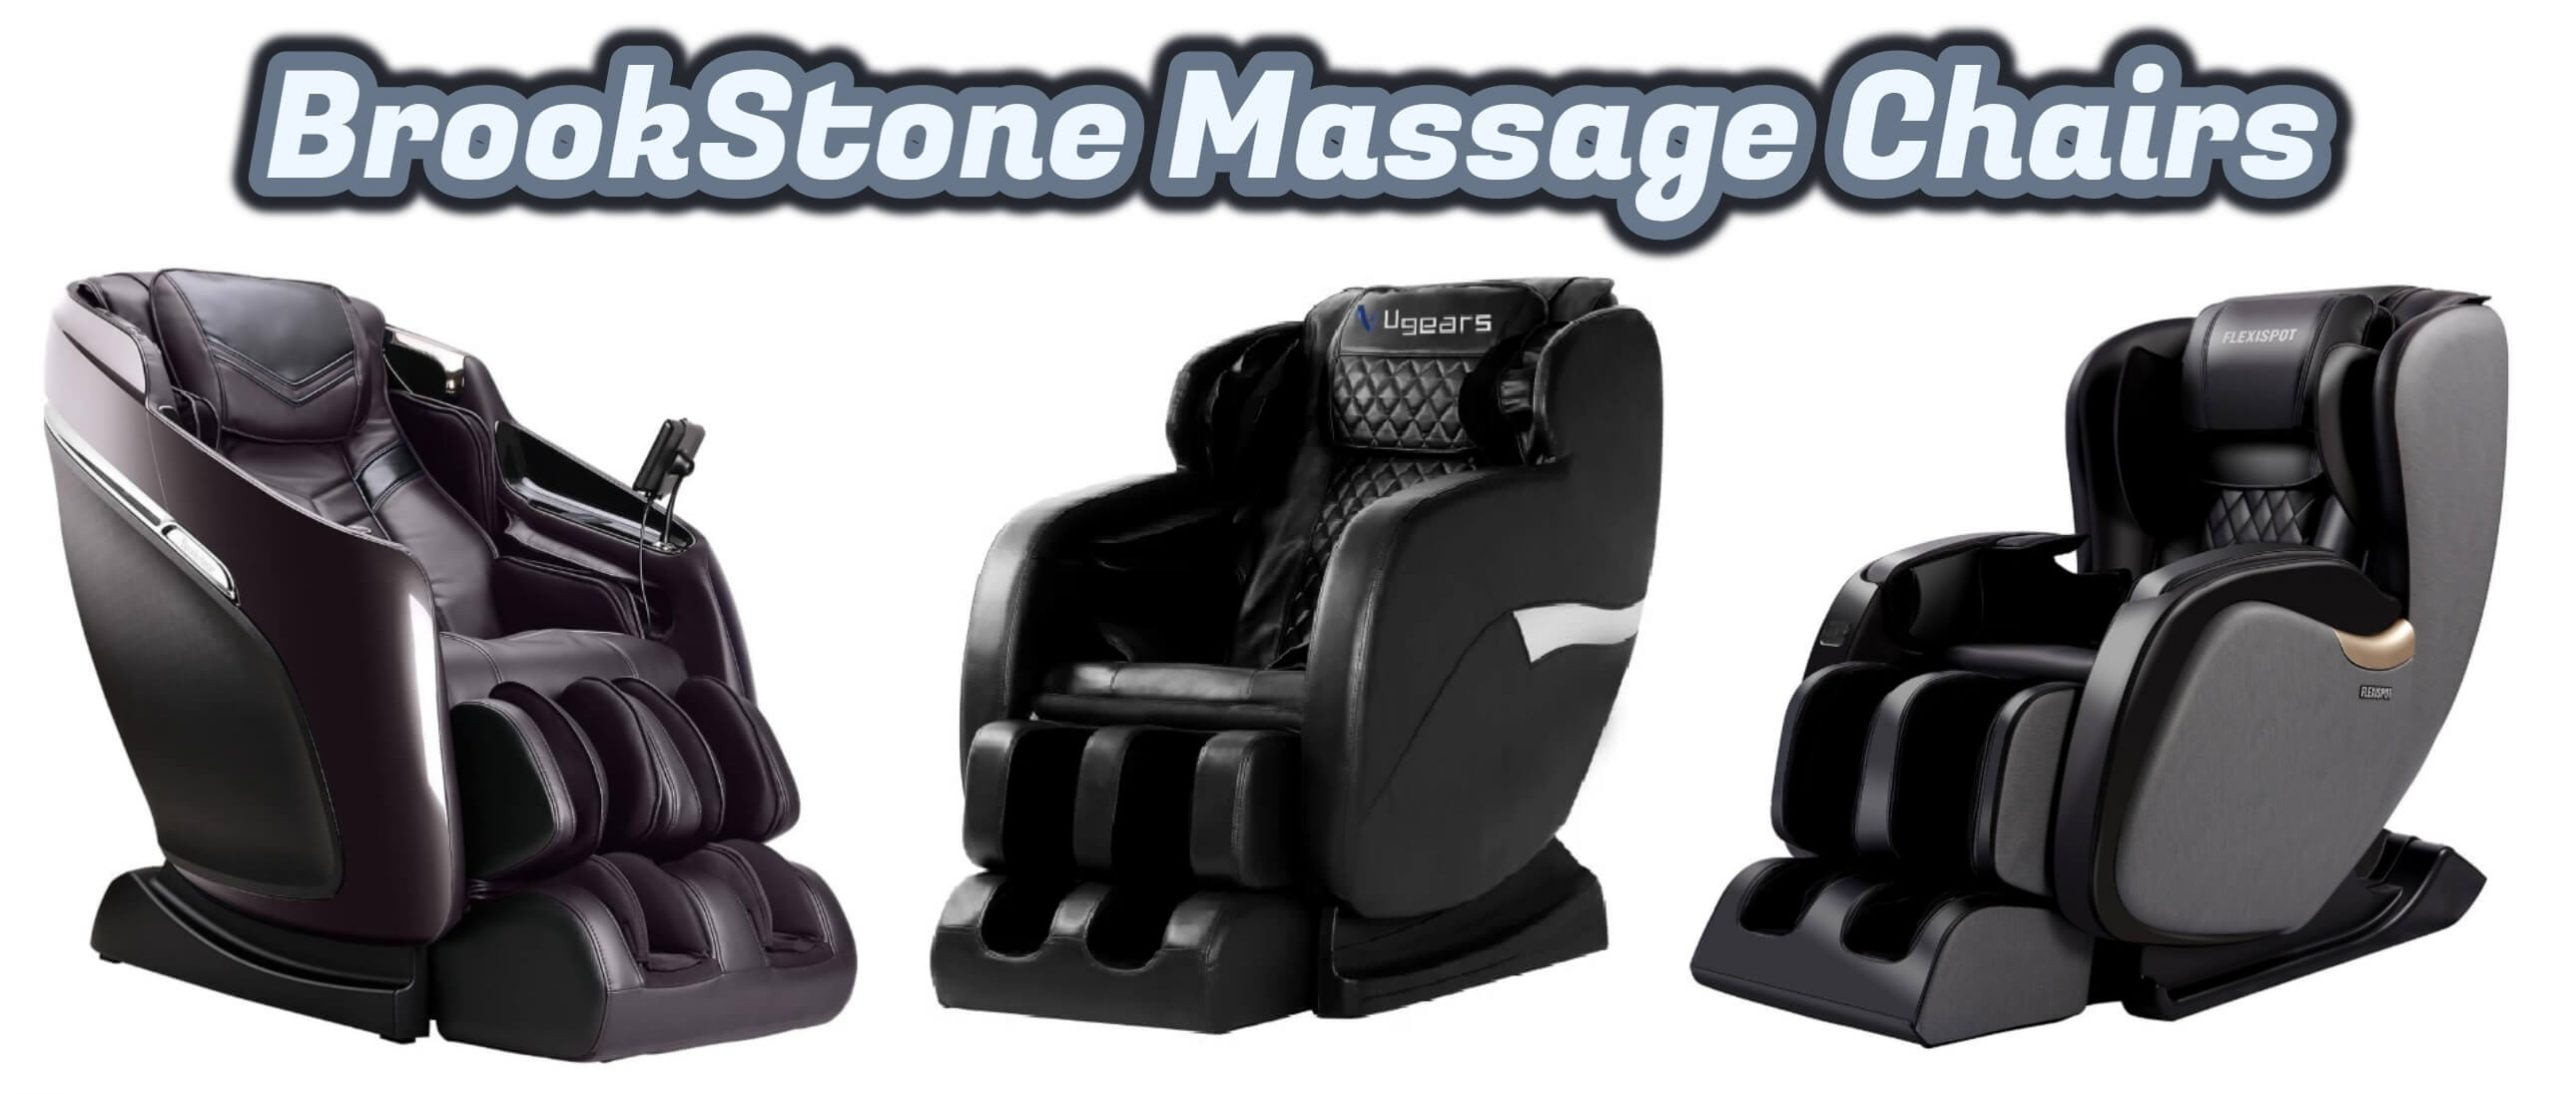 Brookstone Massage Chairs Review